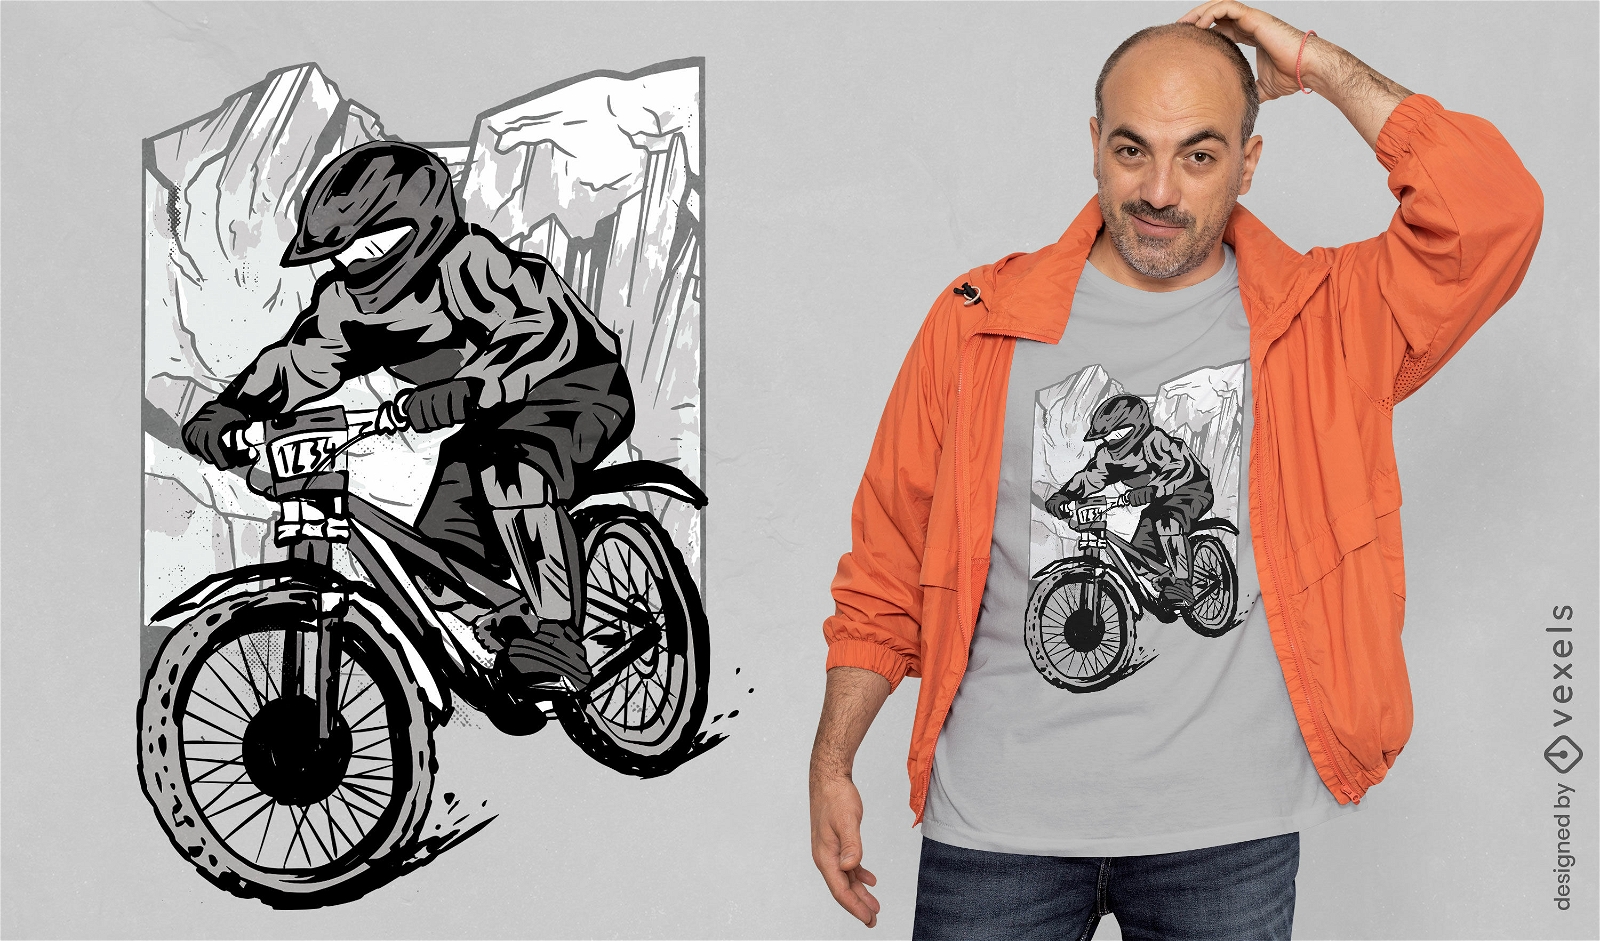 Mountainbike-Transport-T-Shirt-Design